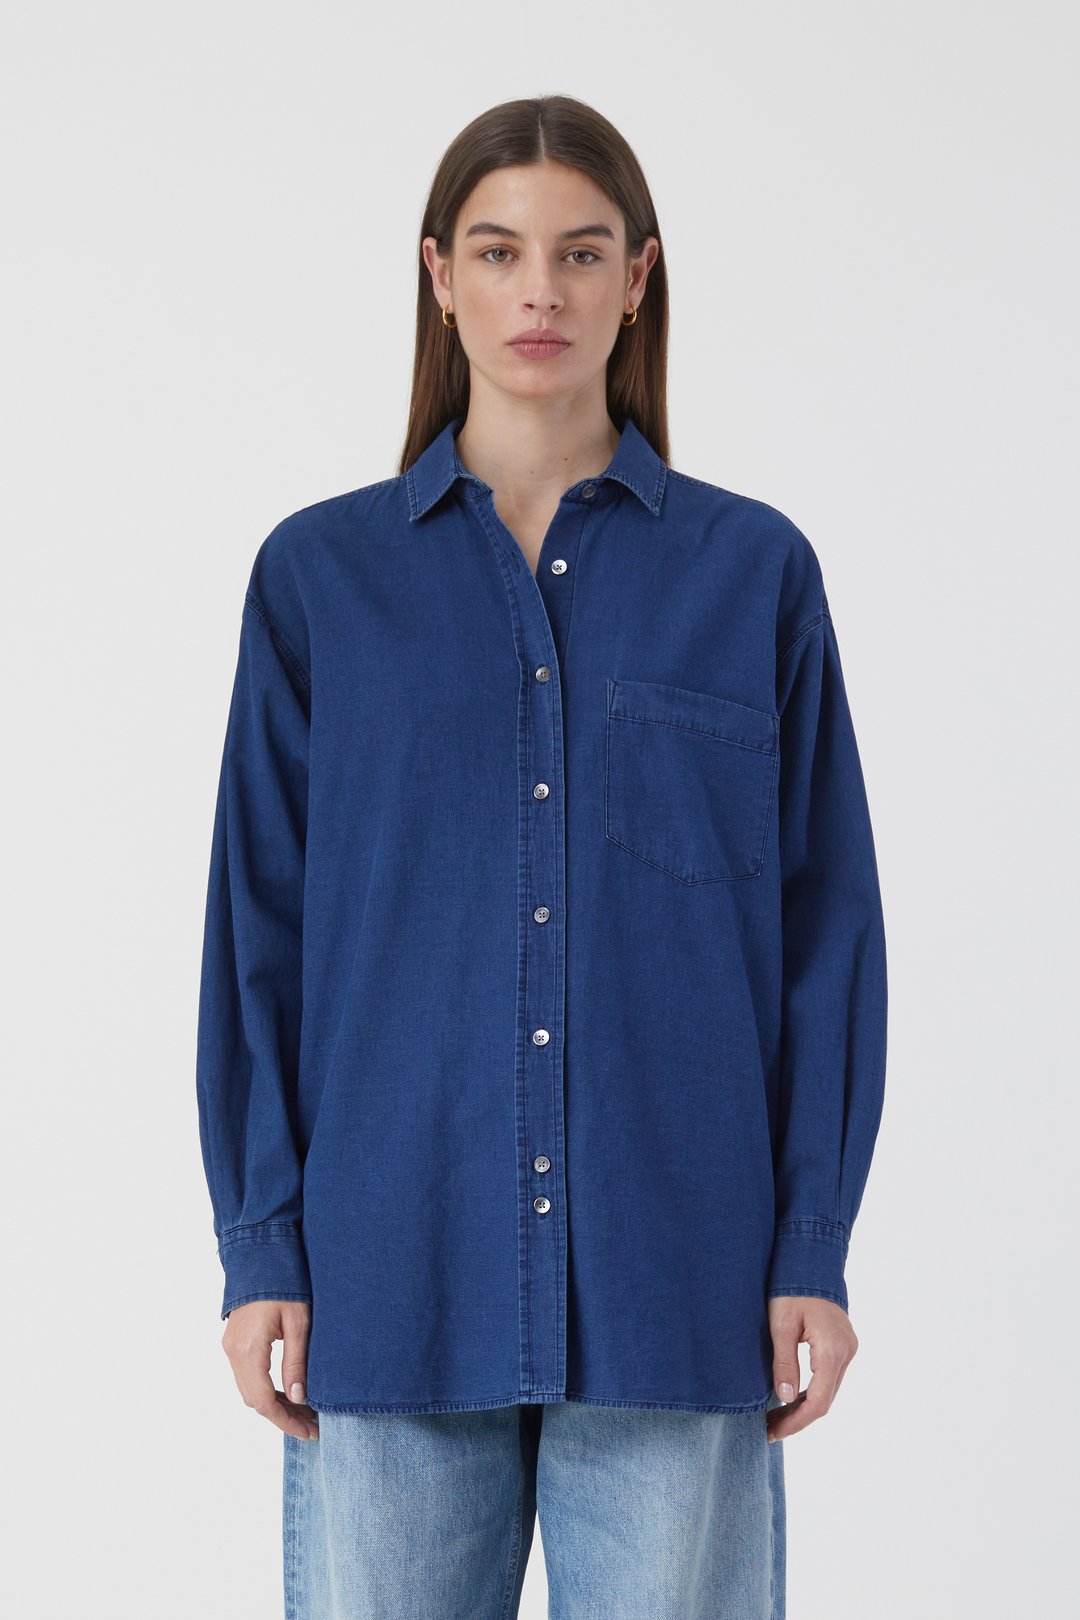 SkylineWears Womens Slim Fit Double Pocket Long Sleeve Button Down Blouse  Denim Jean Shirt